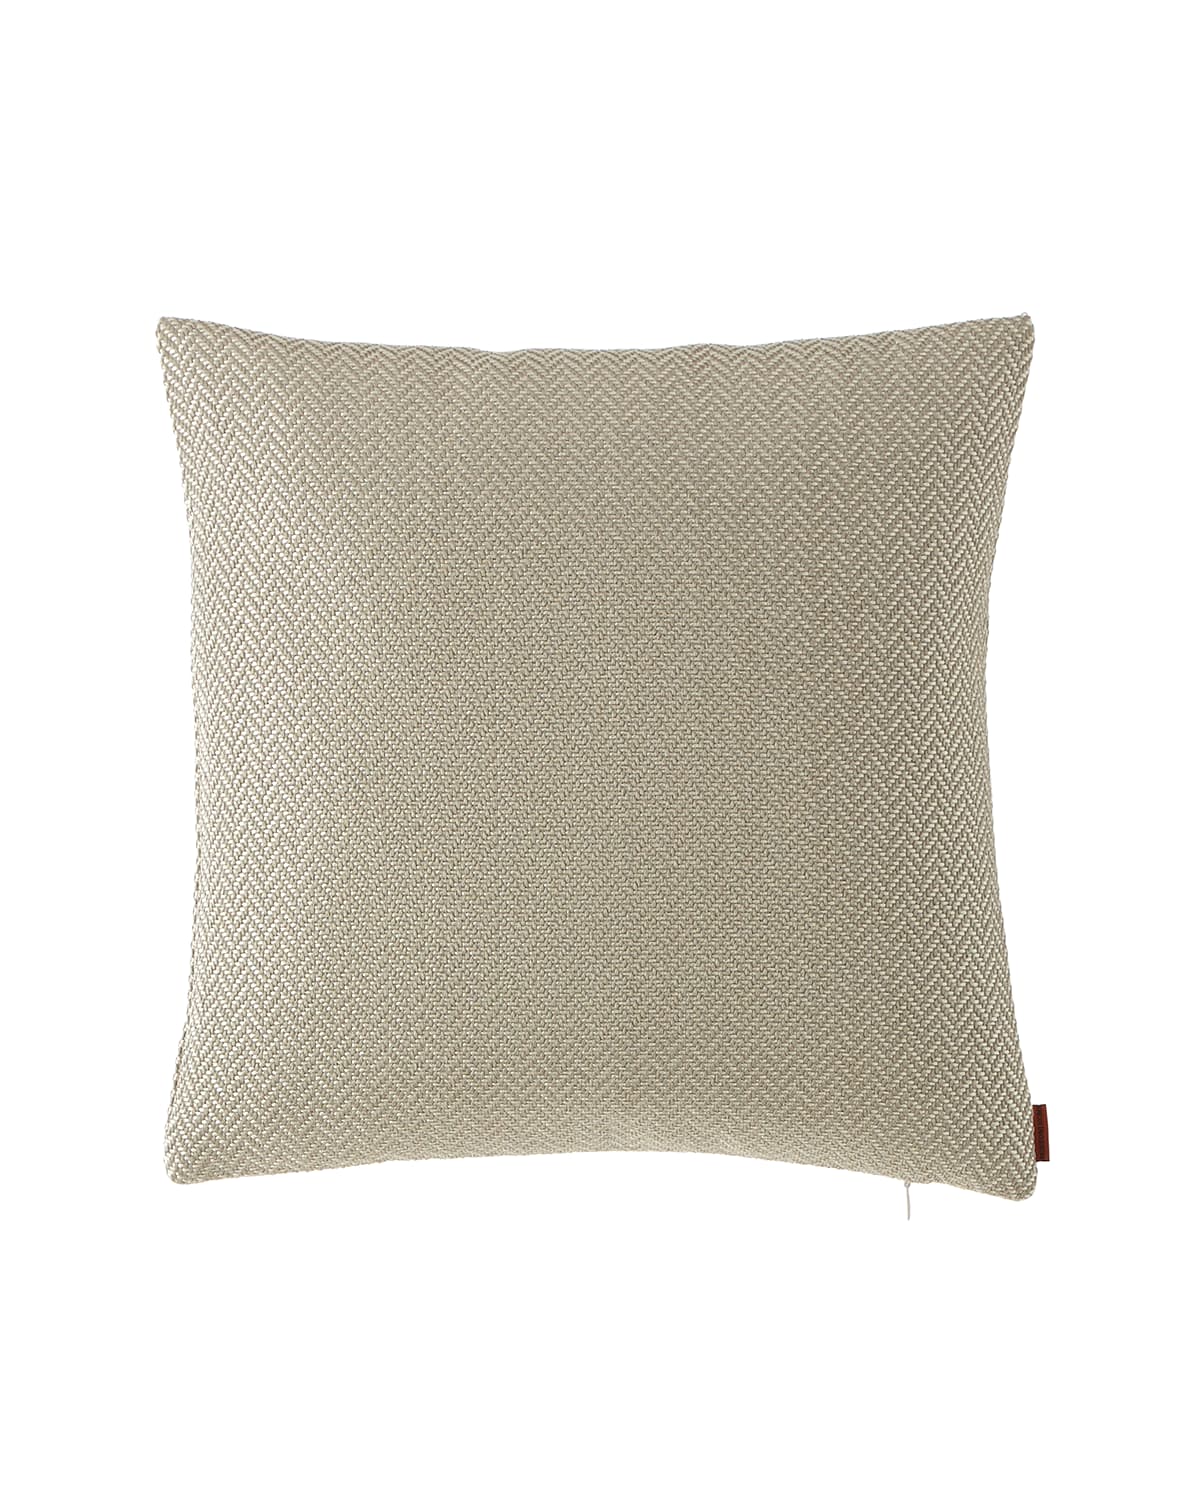 Image Missoni Home Ribe Decorative Pillow, 16"Sq.